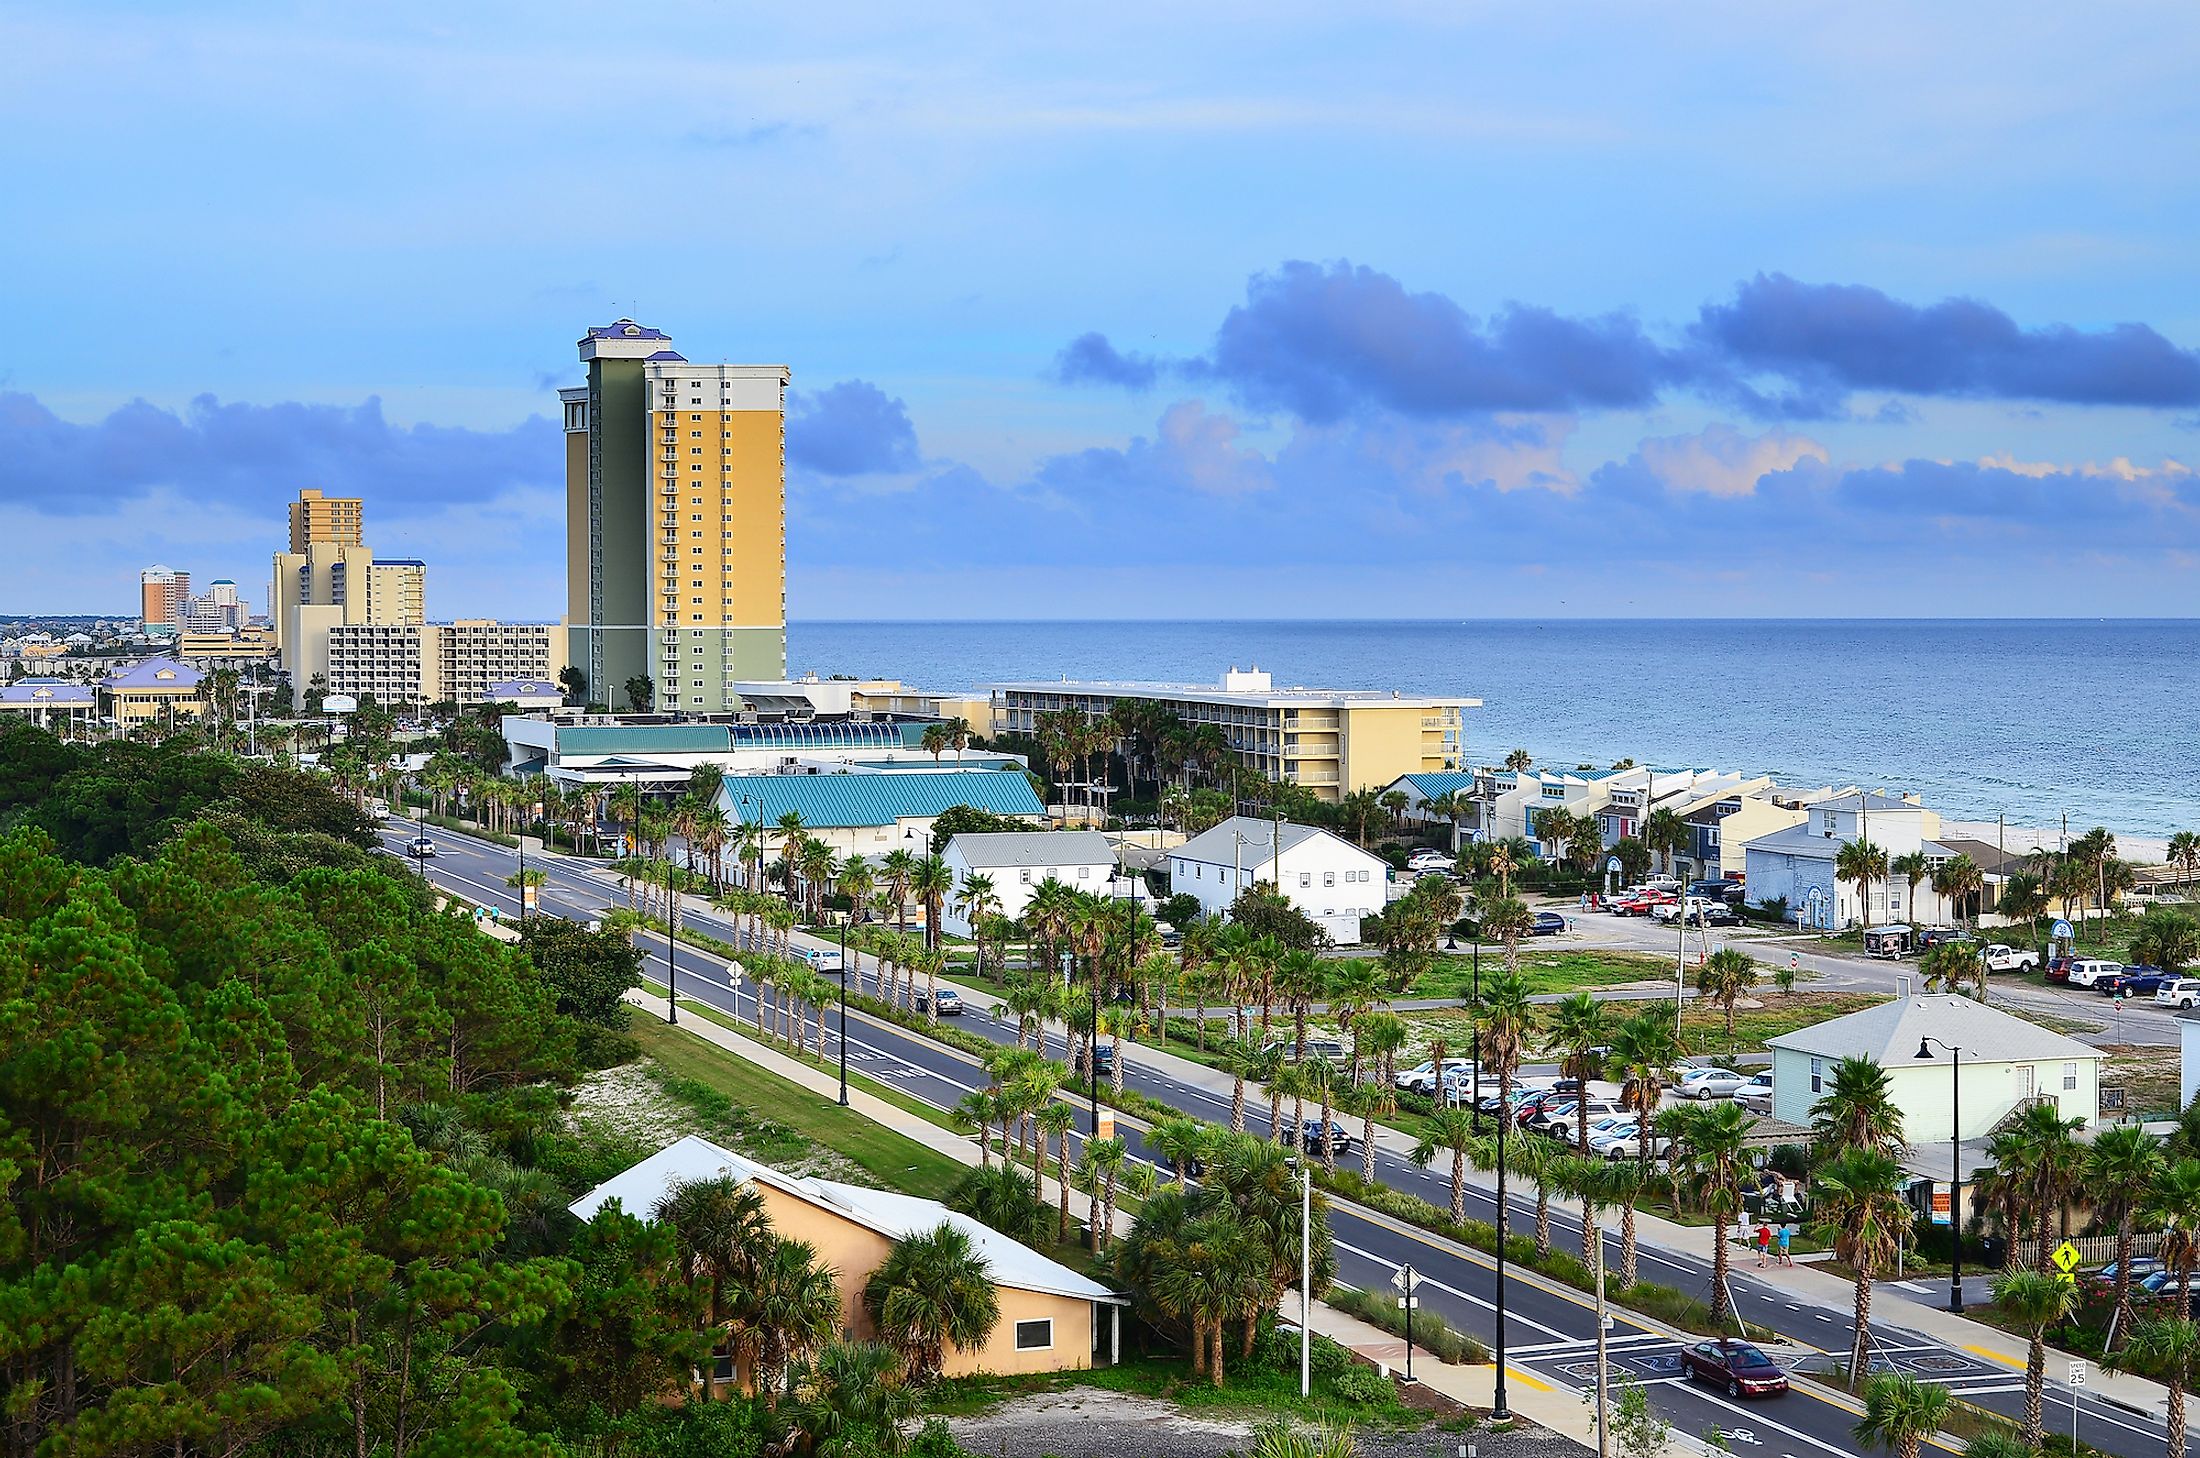 Cityscape image of Panama City Beach, Florida